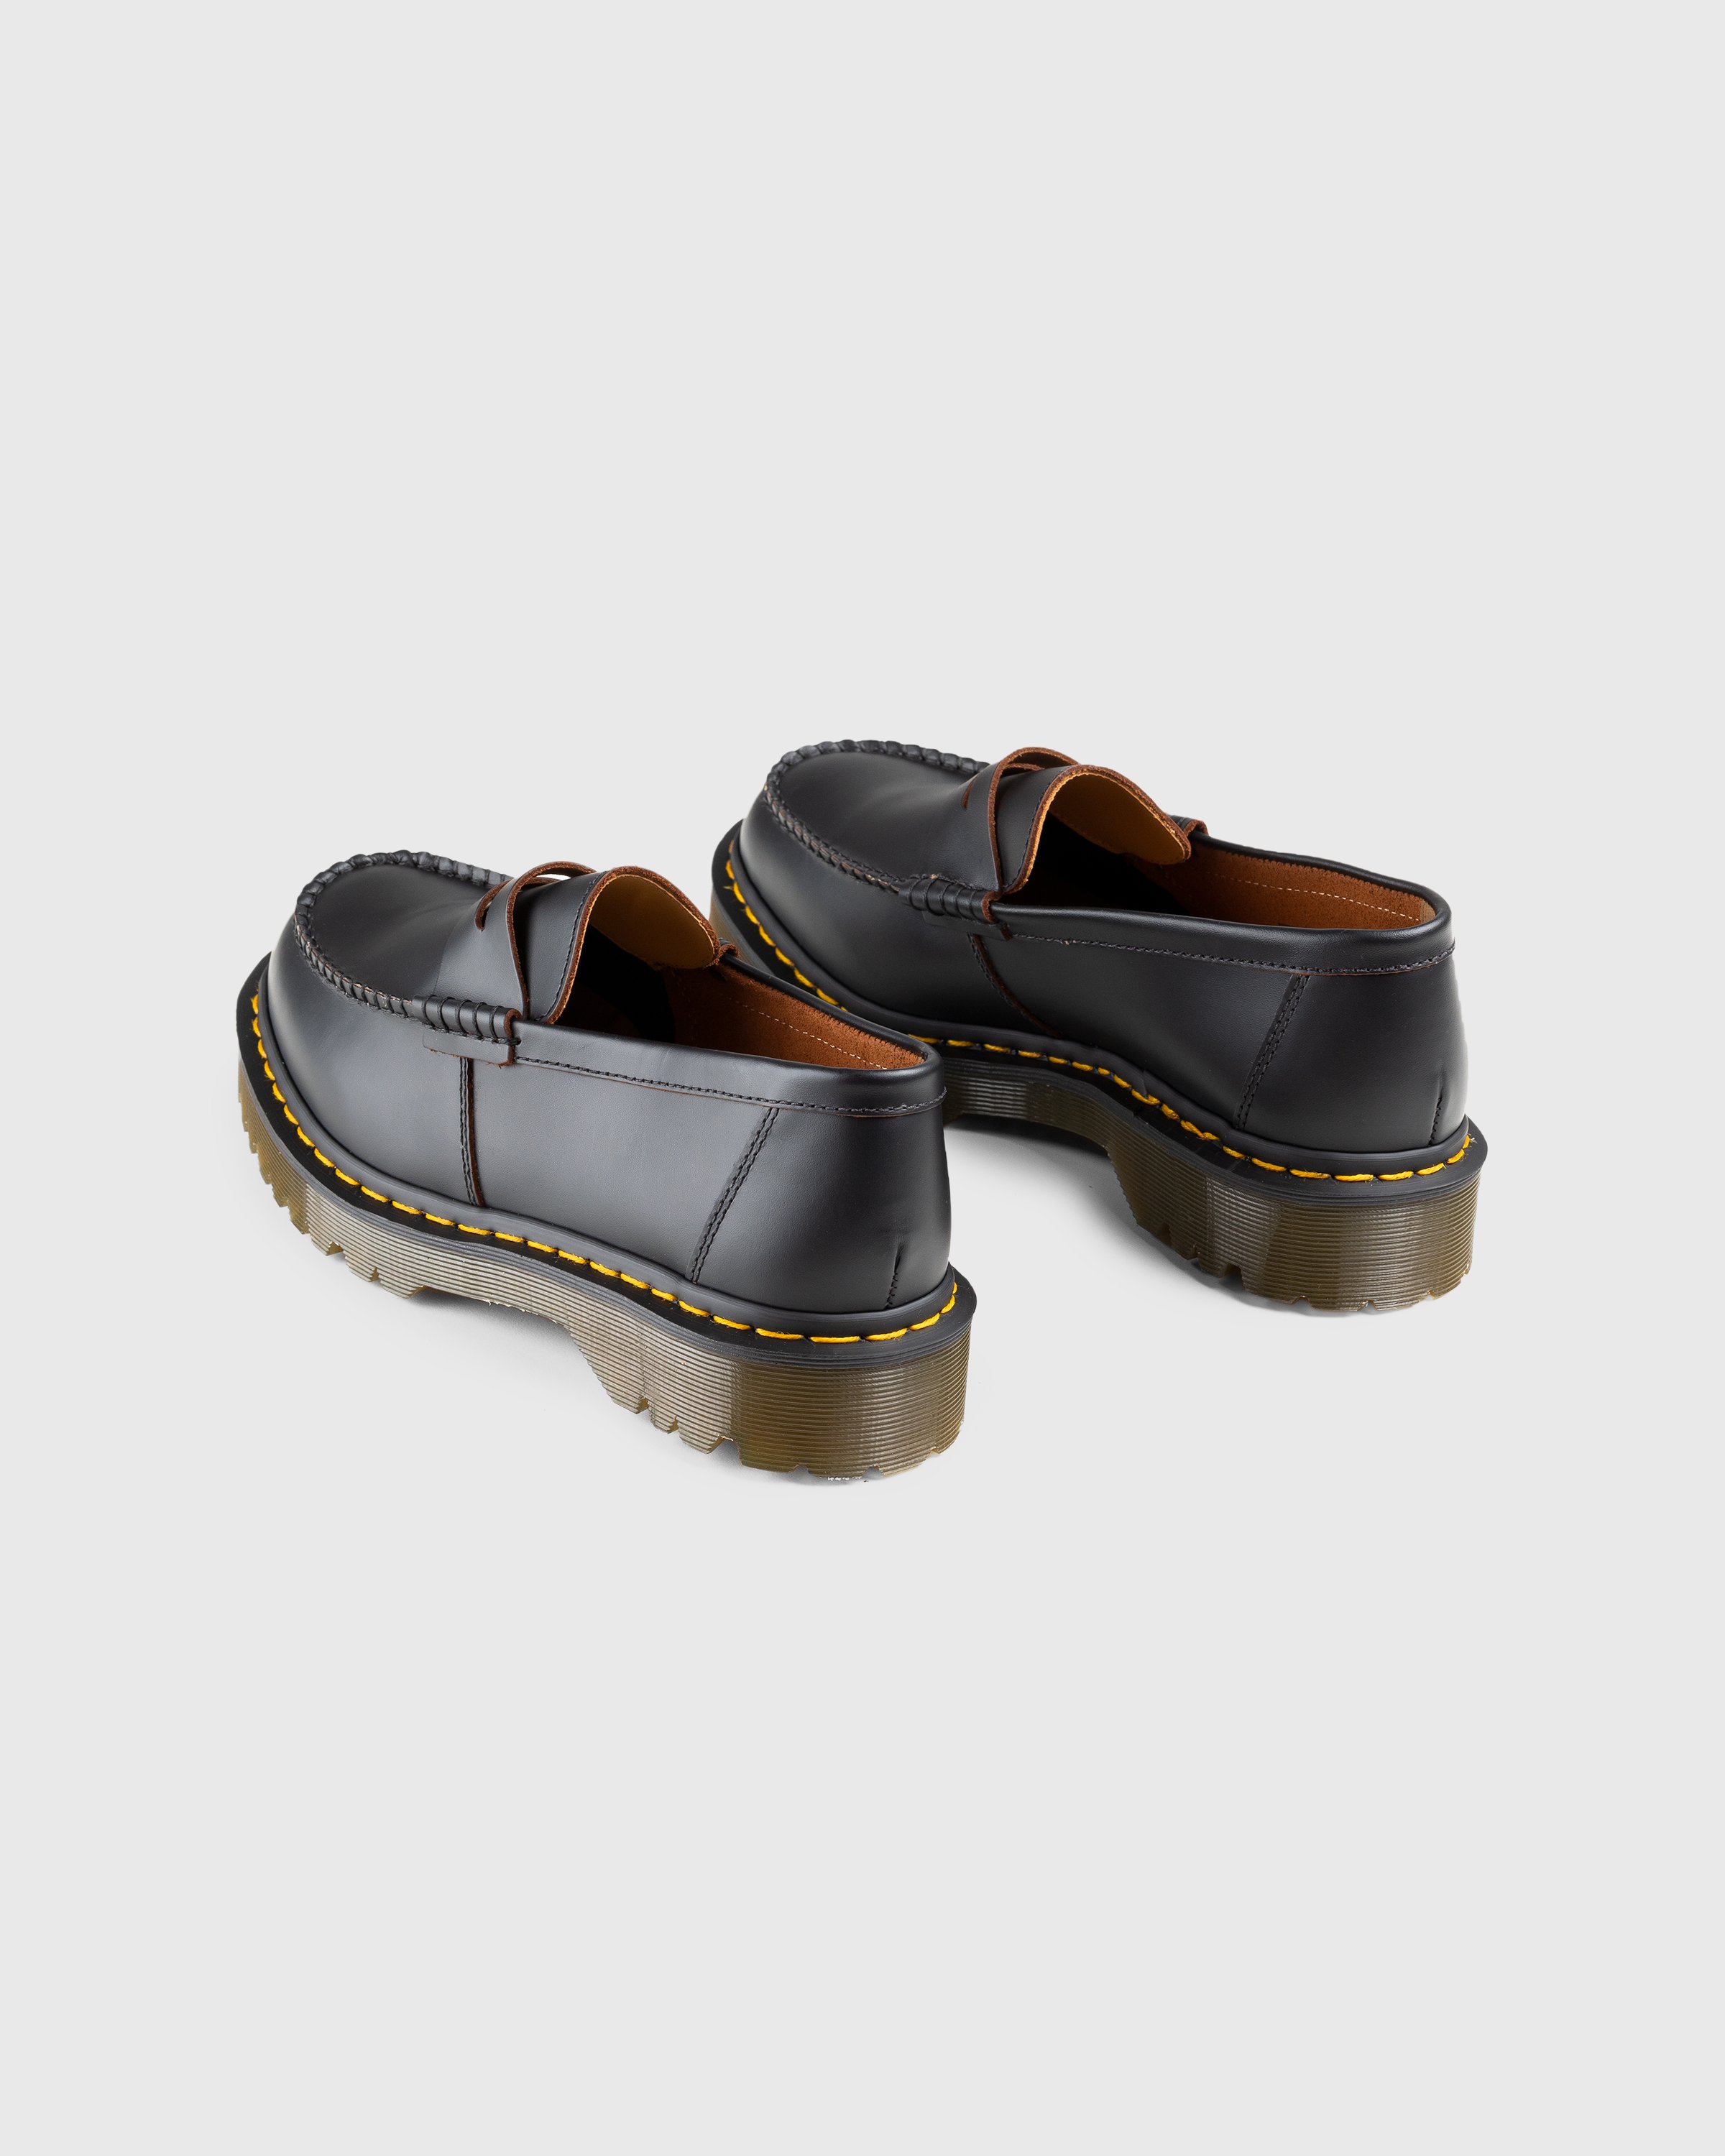 Dr. Martens - Penton Bex Quilon Leather Loafers Black - Footwear - Black - Image 4